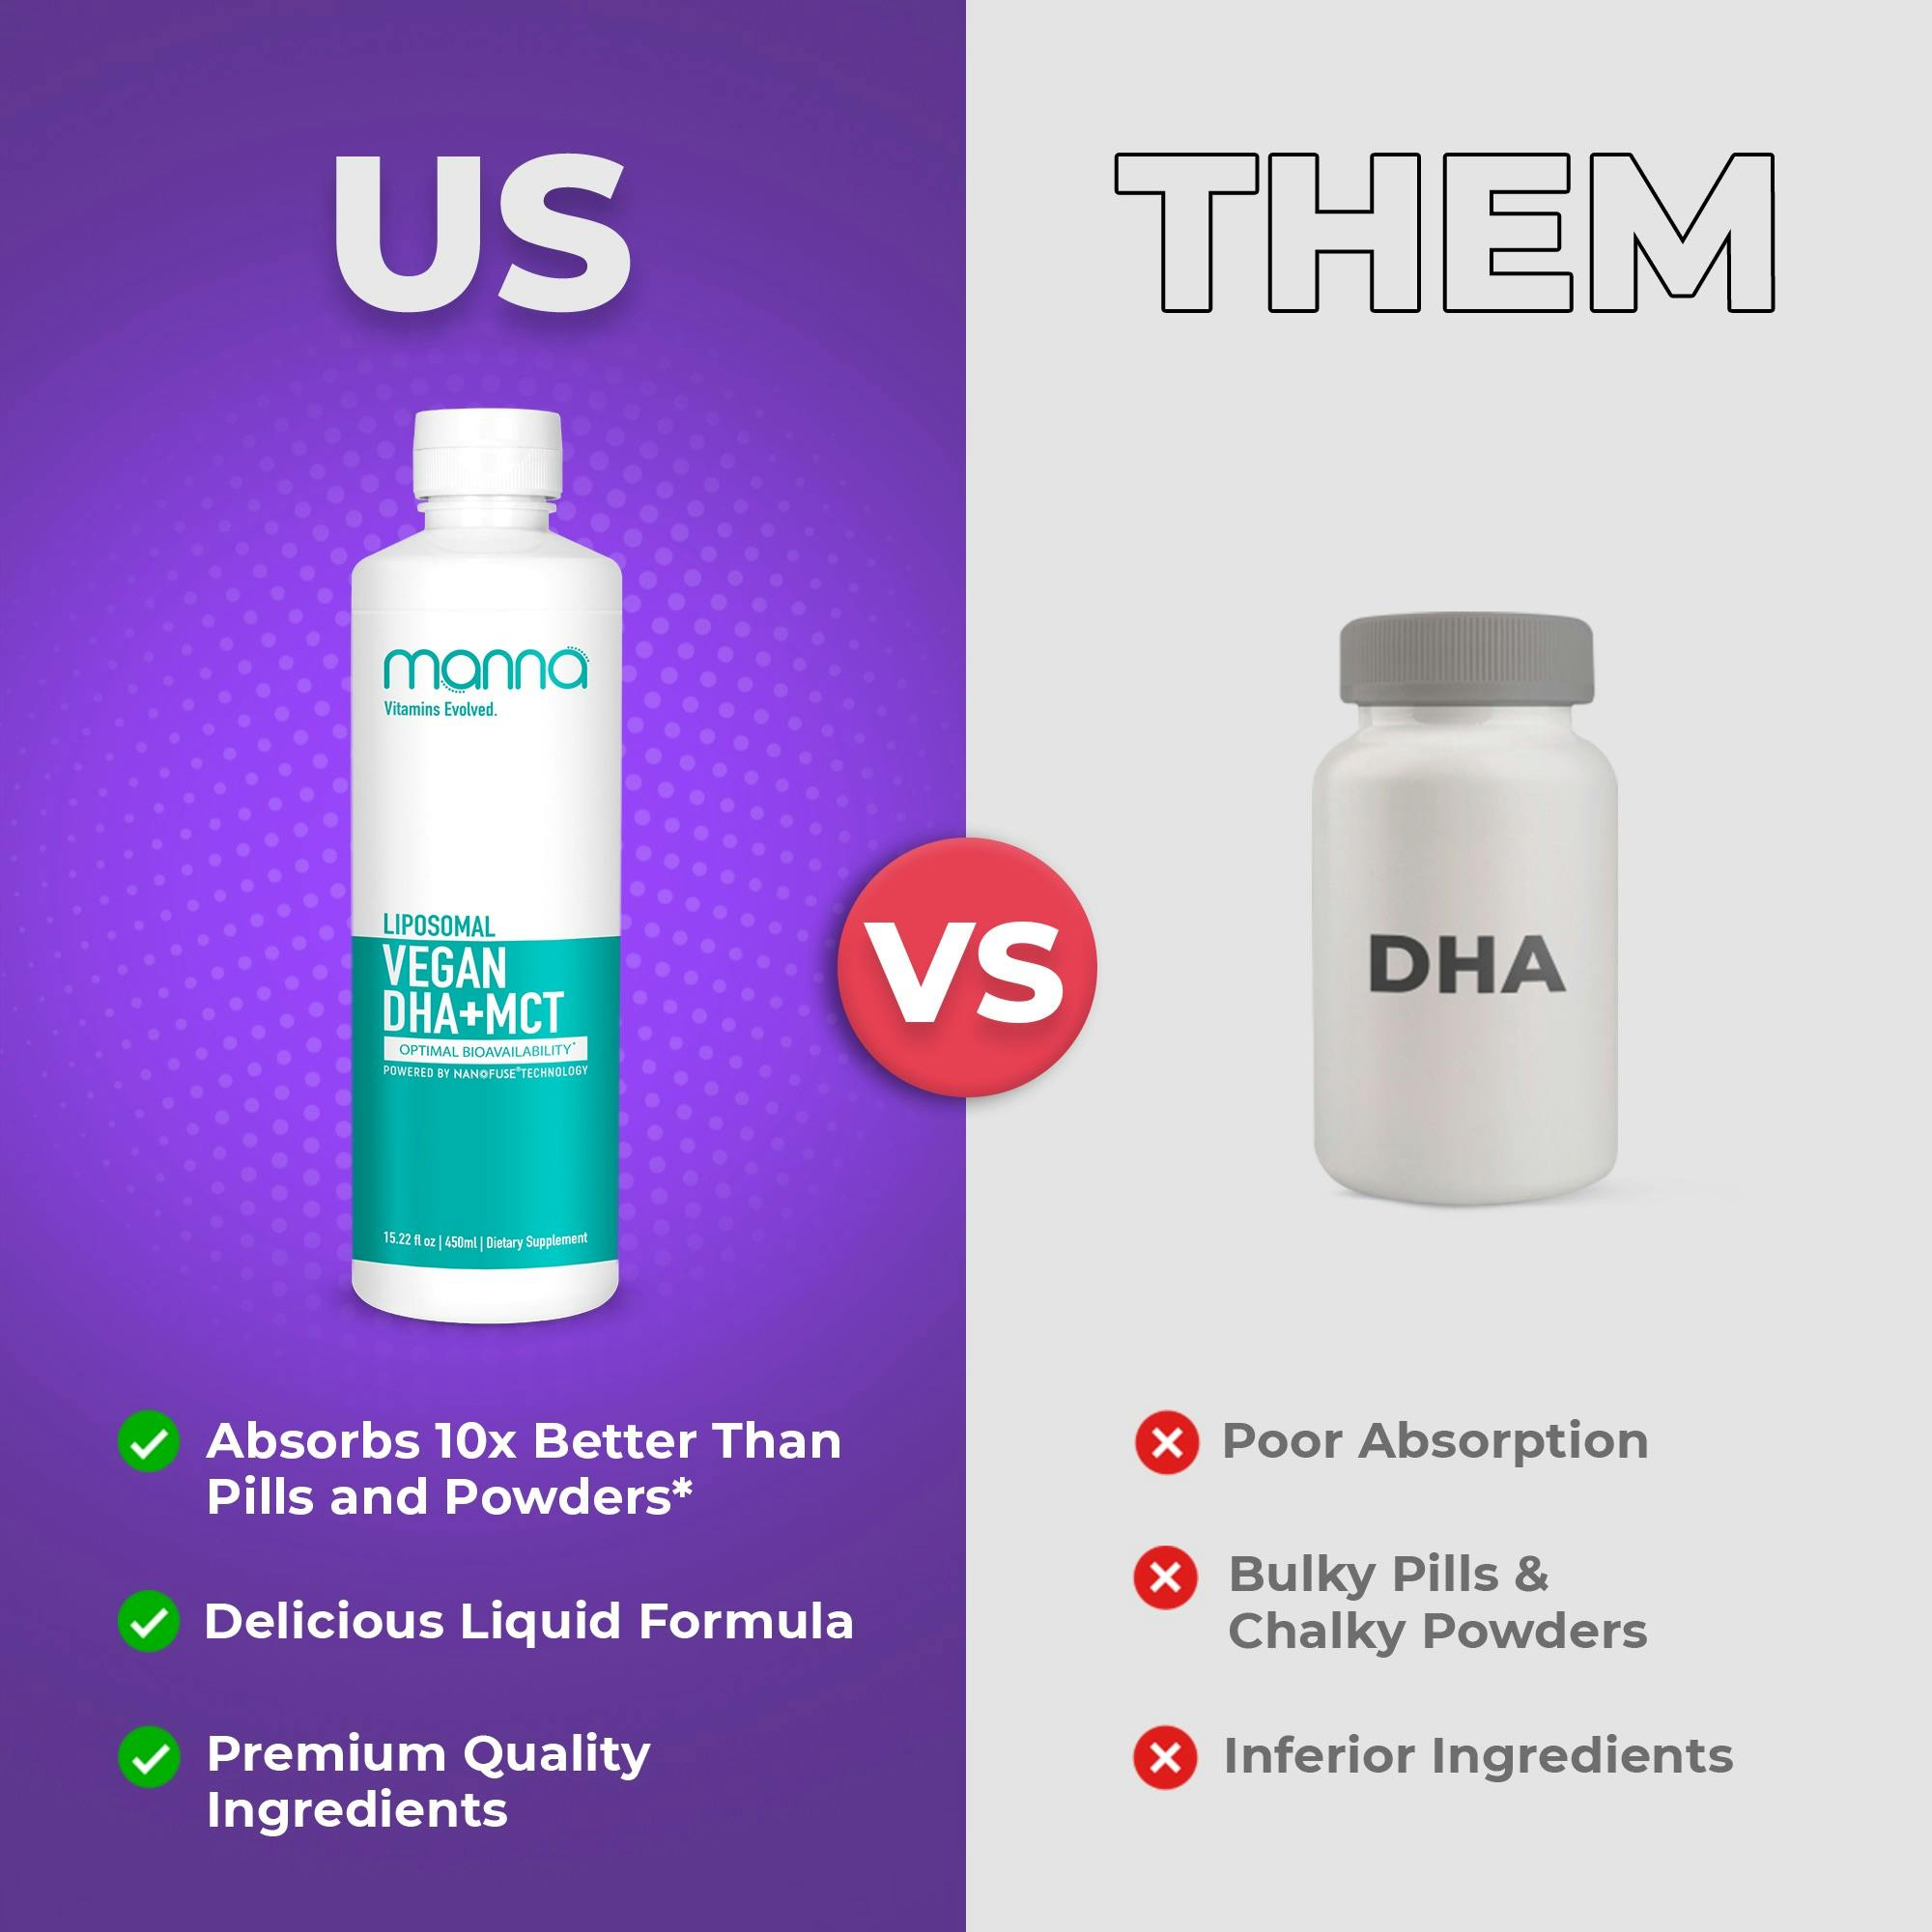 Liposomal Vegan DHA+MCT